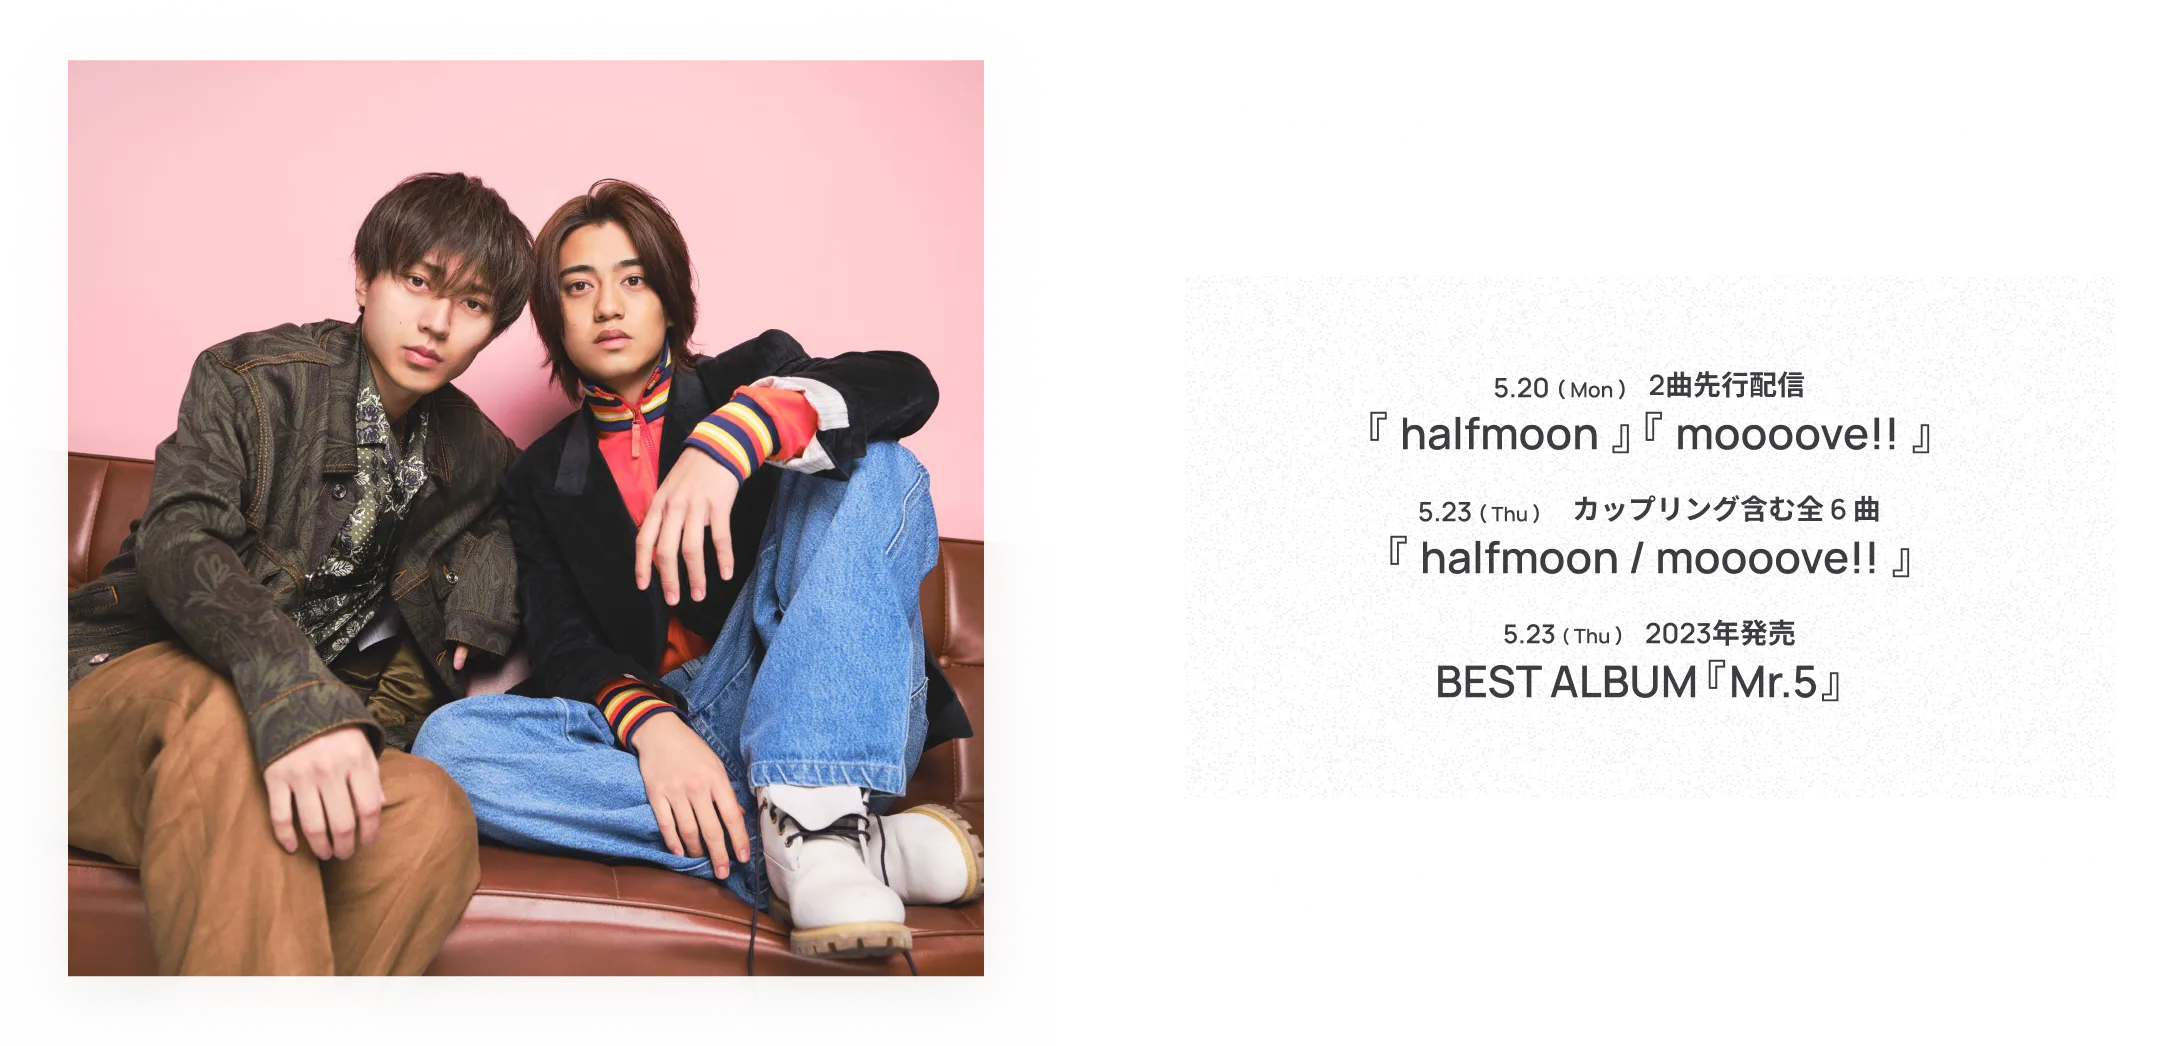 King & Prince Digital Release!!